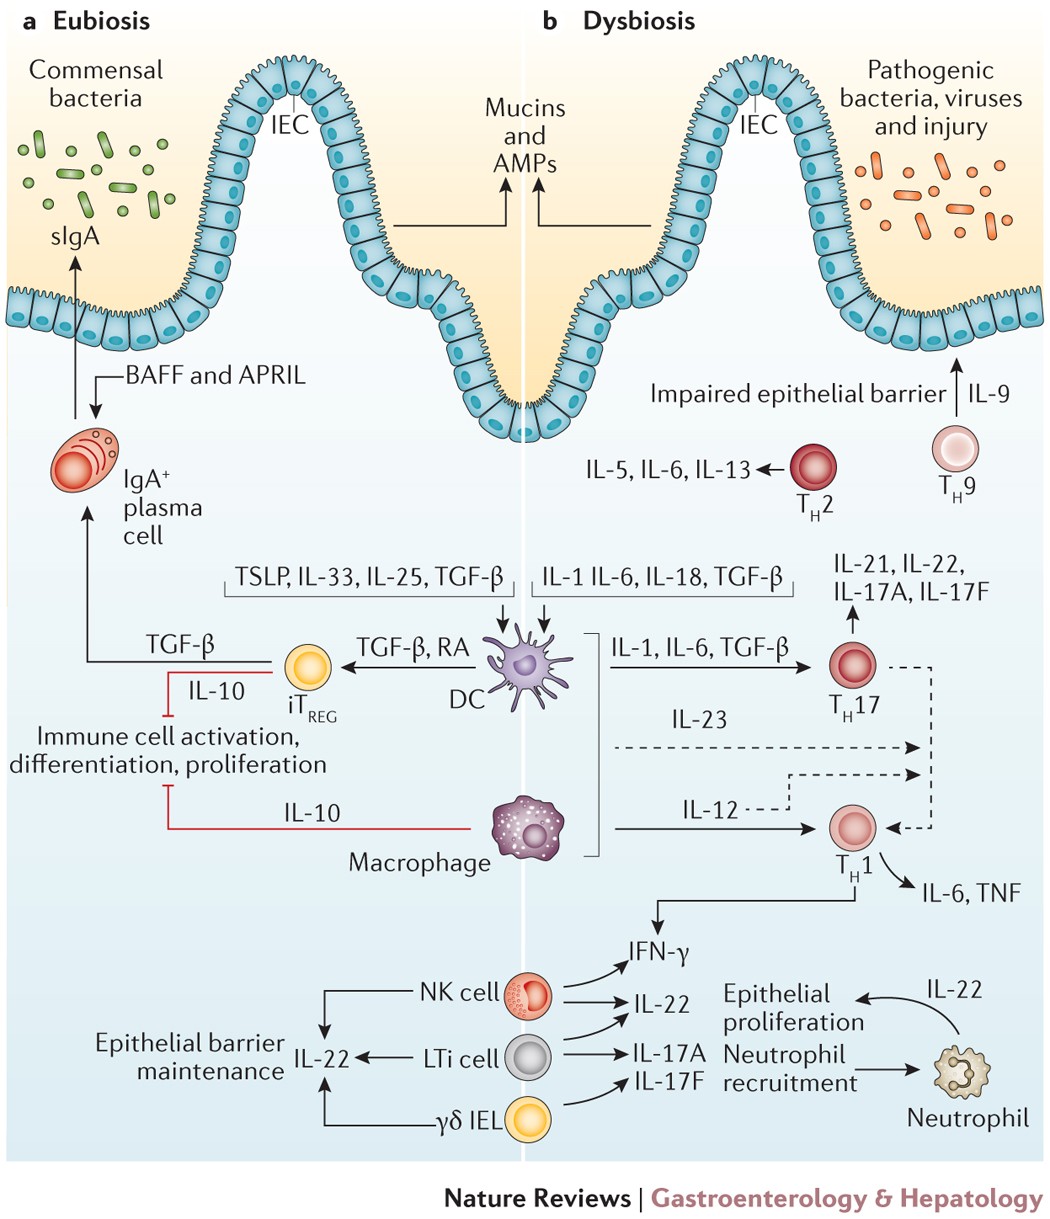 Immunopathogenesis of IBD: current state of the art